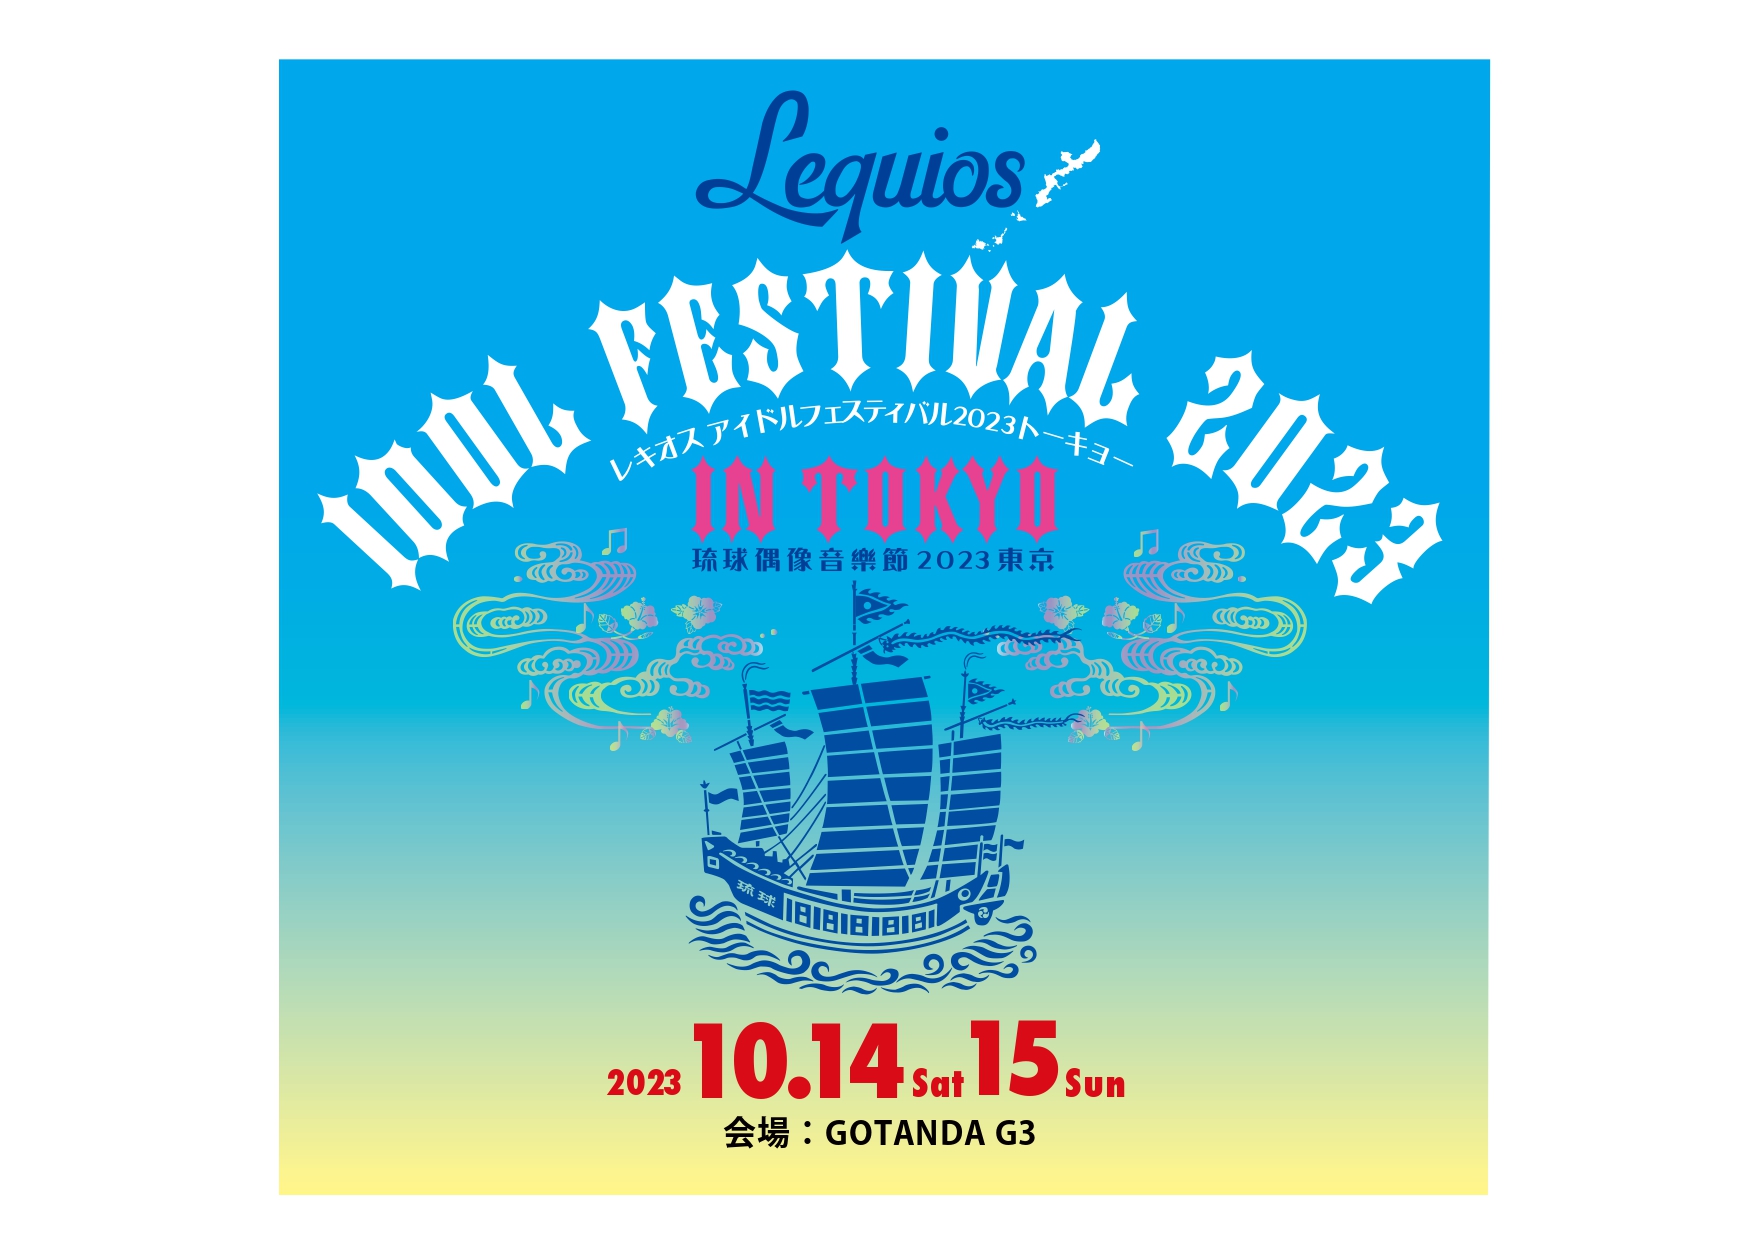 2023.10.14-15 LEQUIOS IDOL FESTIVAL 2023 TOKYO